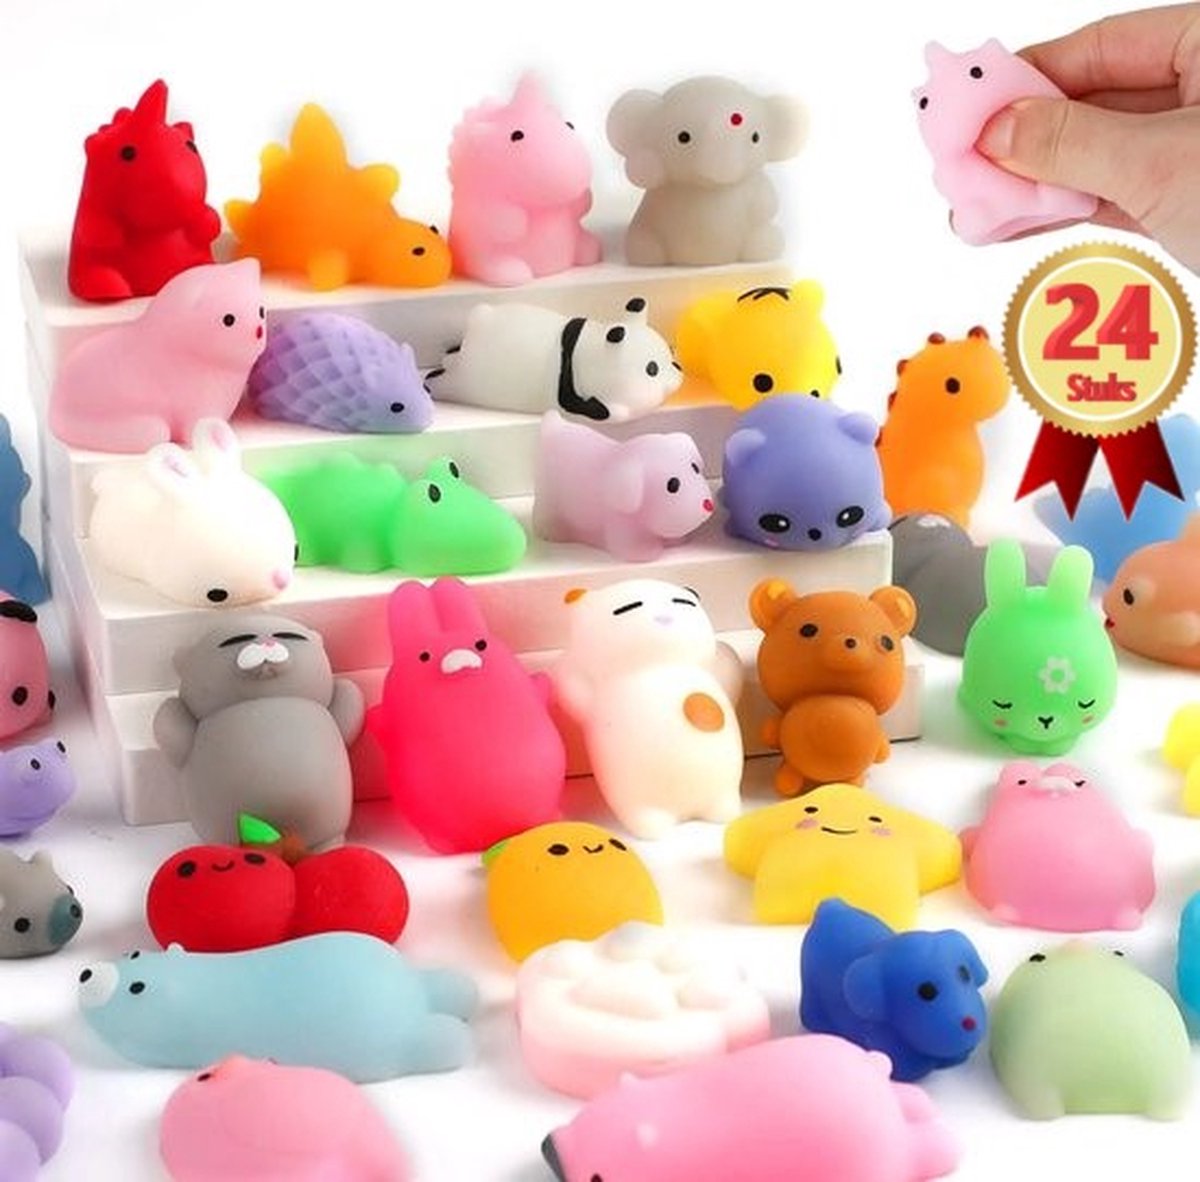 Klikkopers Mochi squishy Set 24 stuks Mochi Squishy Fidget Toy Squishy Soft animal Mochies Antistress